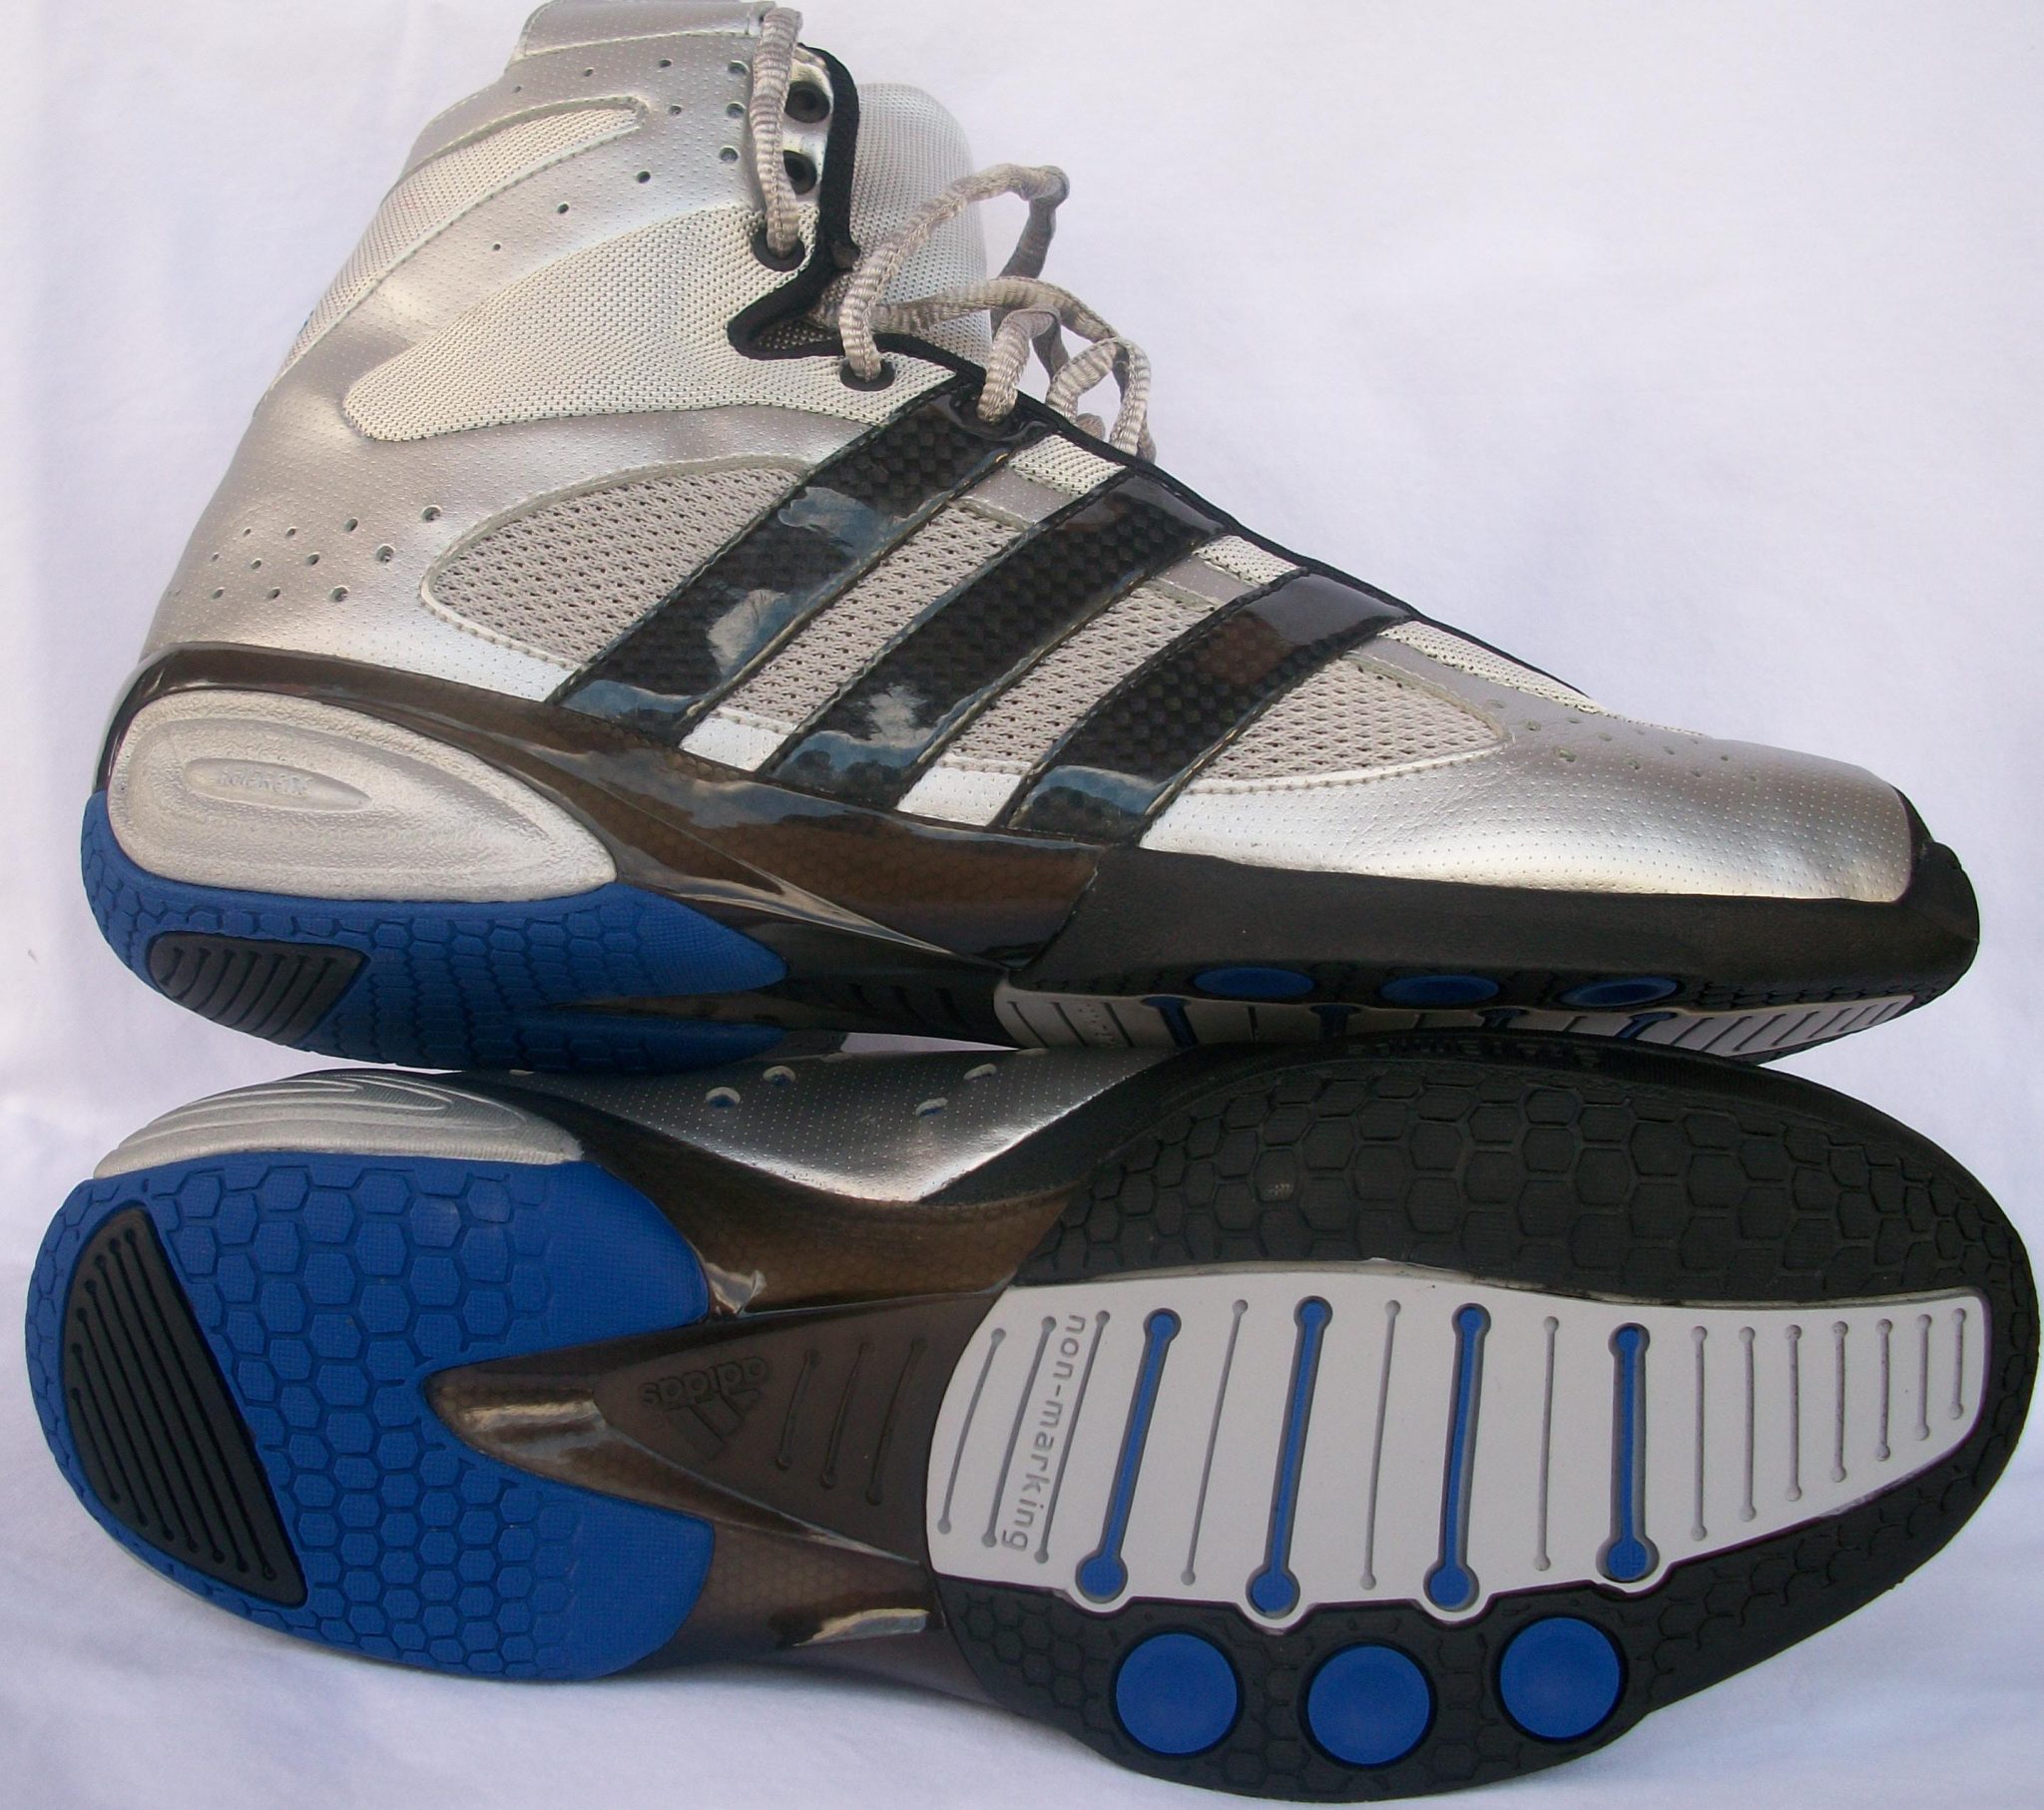 adistar fencing shoes